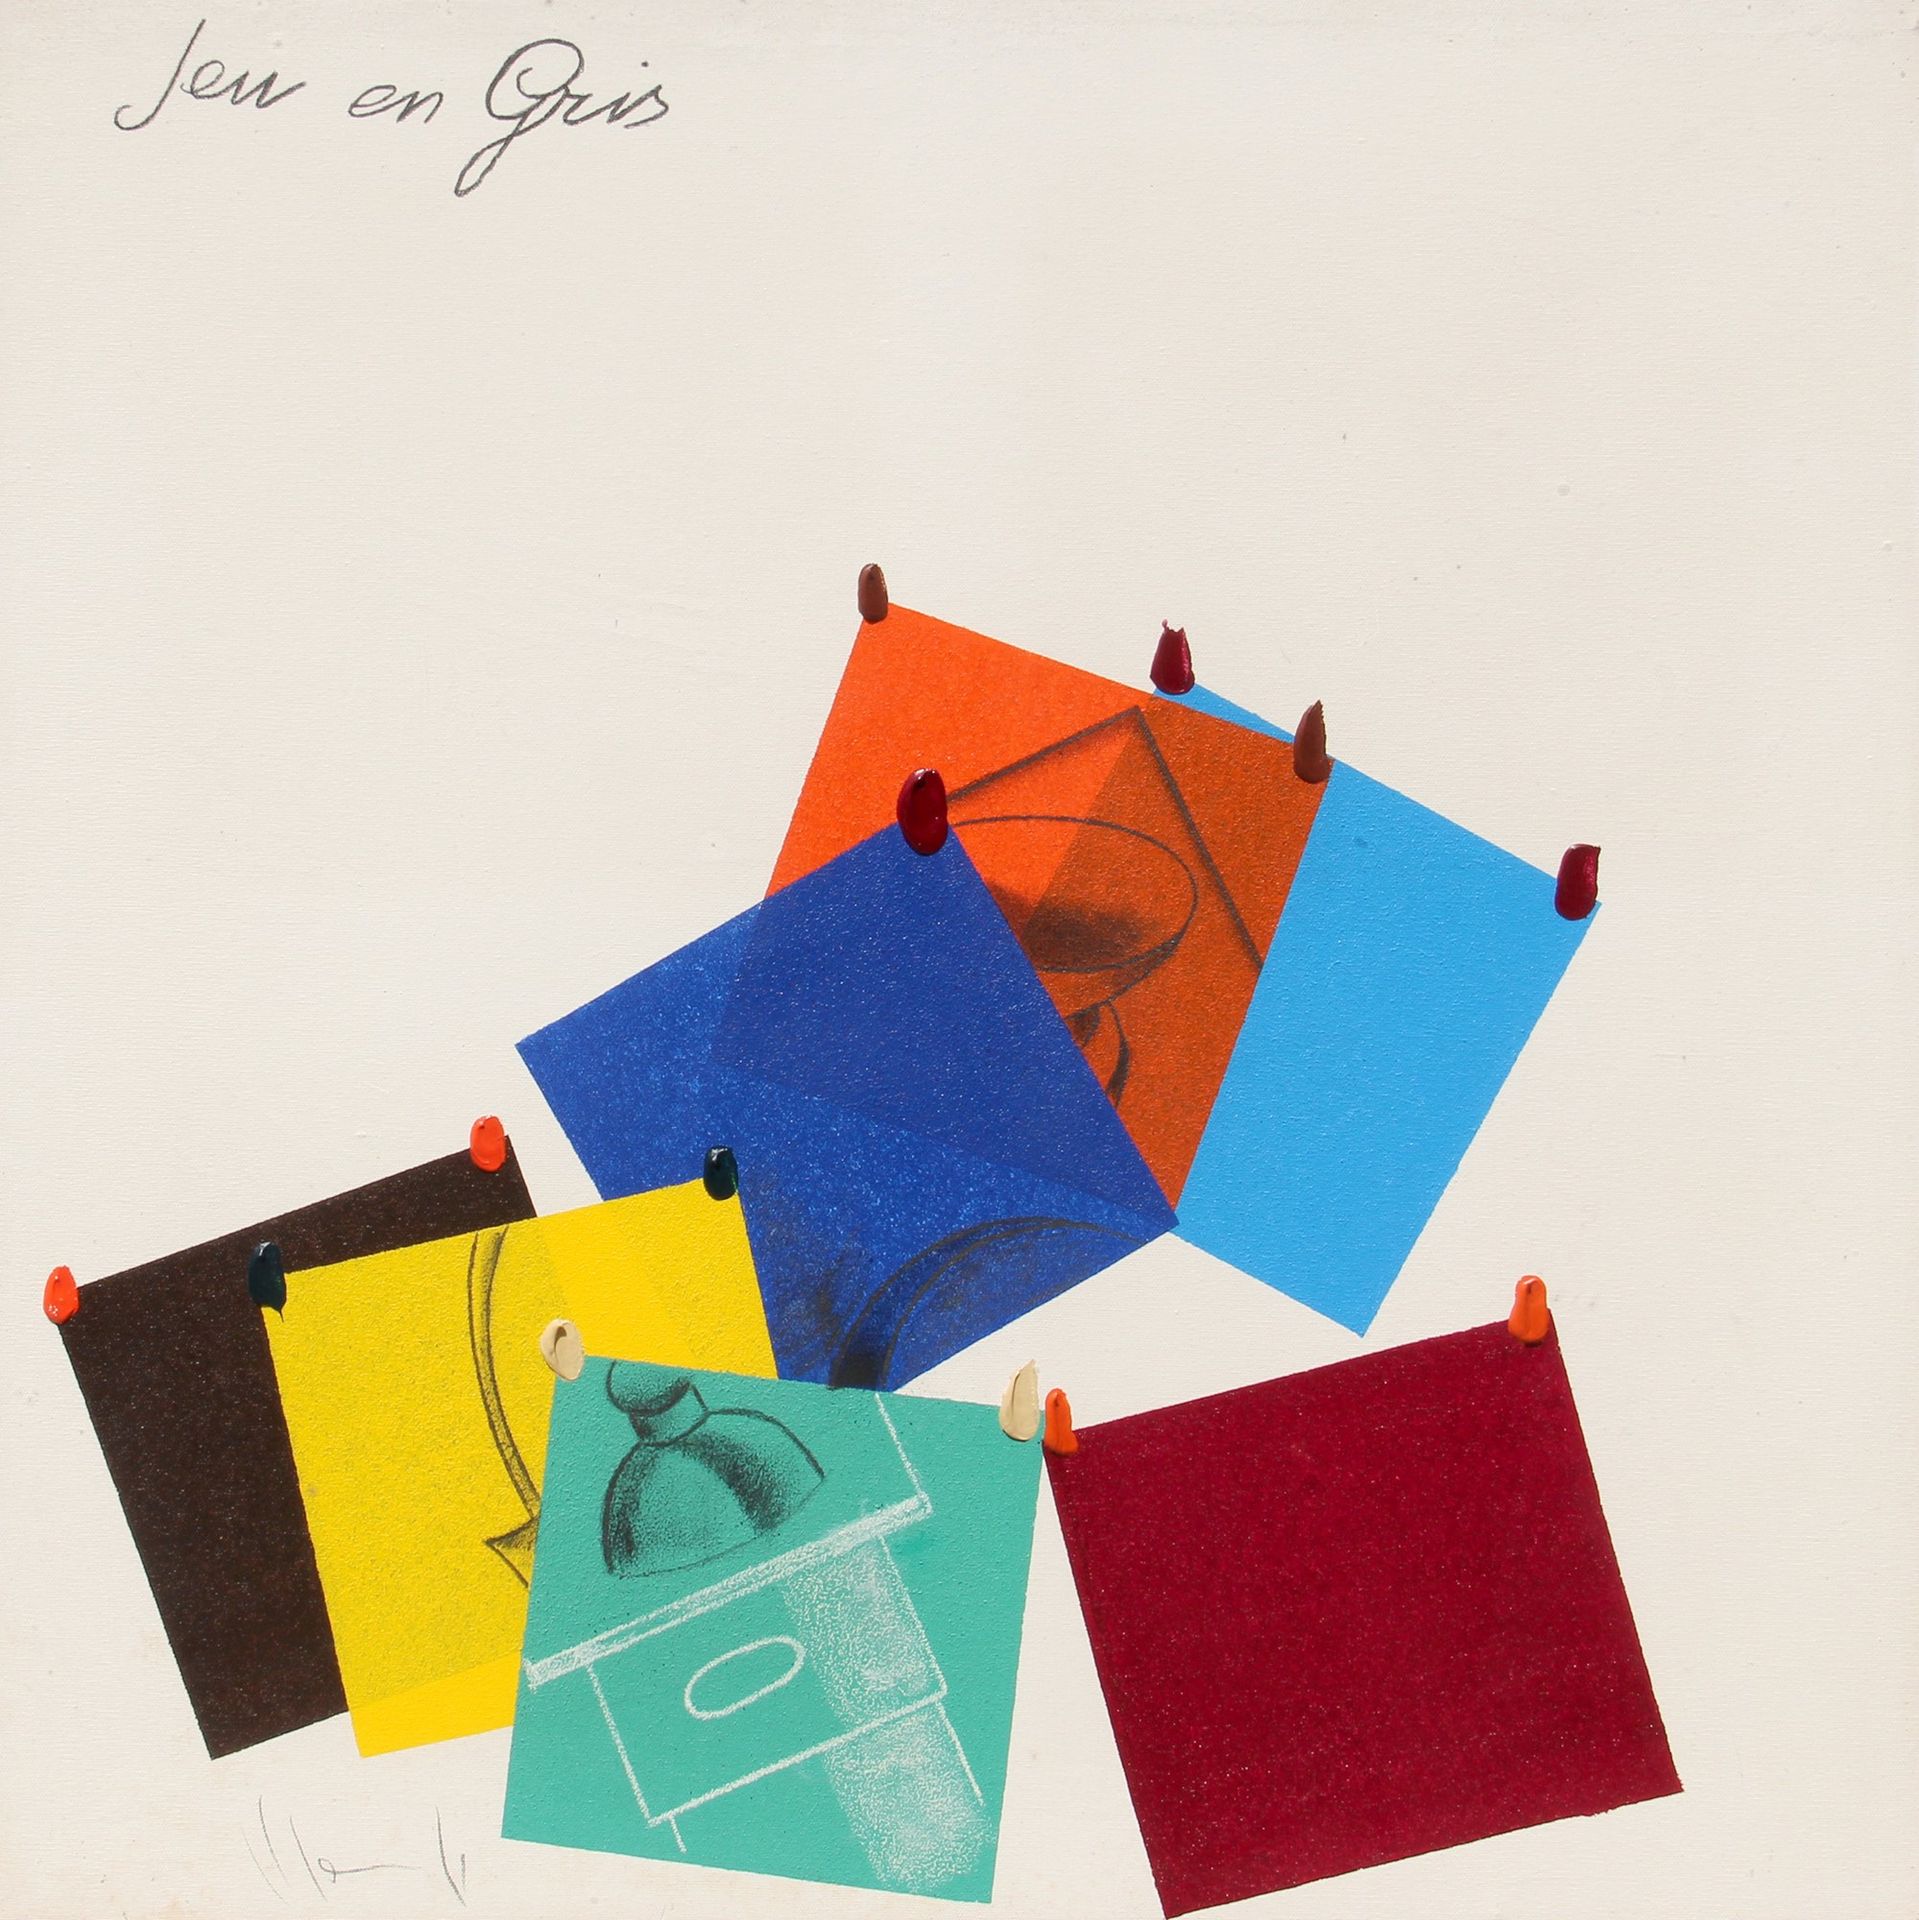 Aldo MONDINO Jeu en gris 1970年代，油画和丙烯画布，80x80厘米

蒙迪诺档案馆的证书，编号为。20140107120201，日期&hellip;